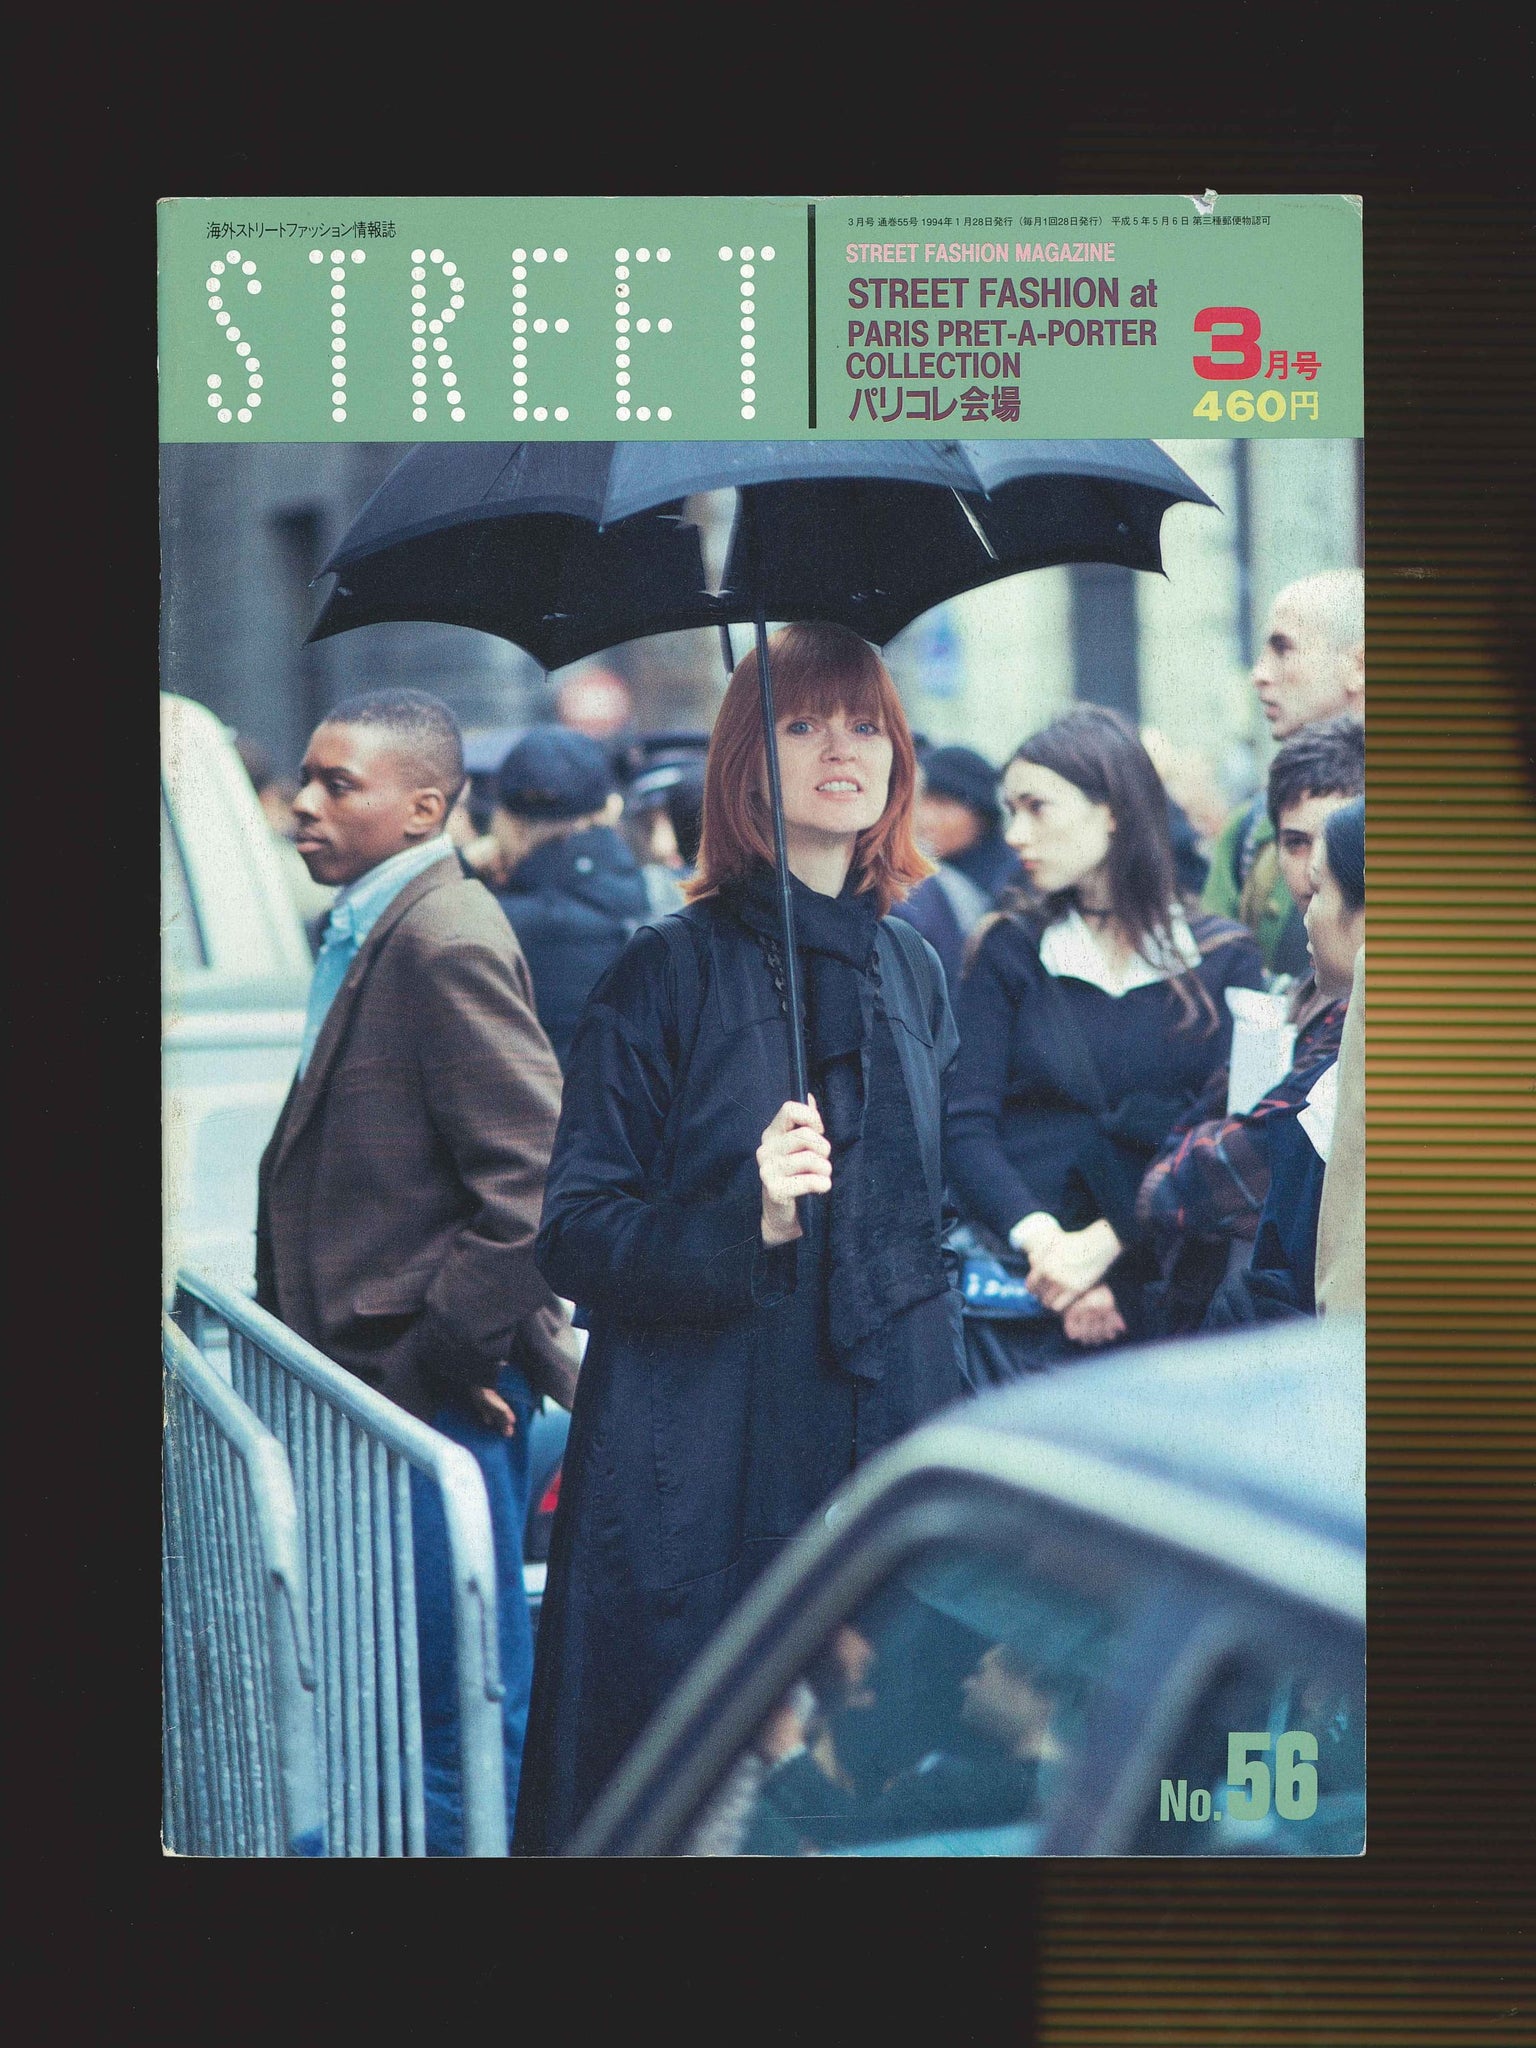 STREET magazine no. 56 / march 1994 / paris collections / shoichi aoki